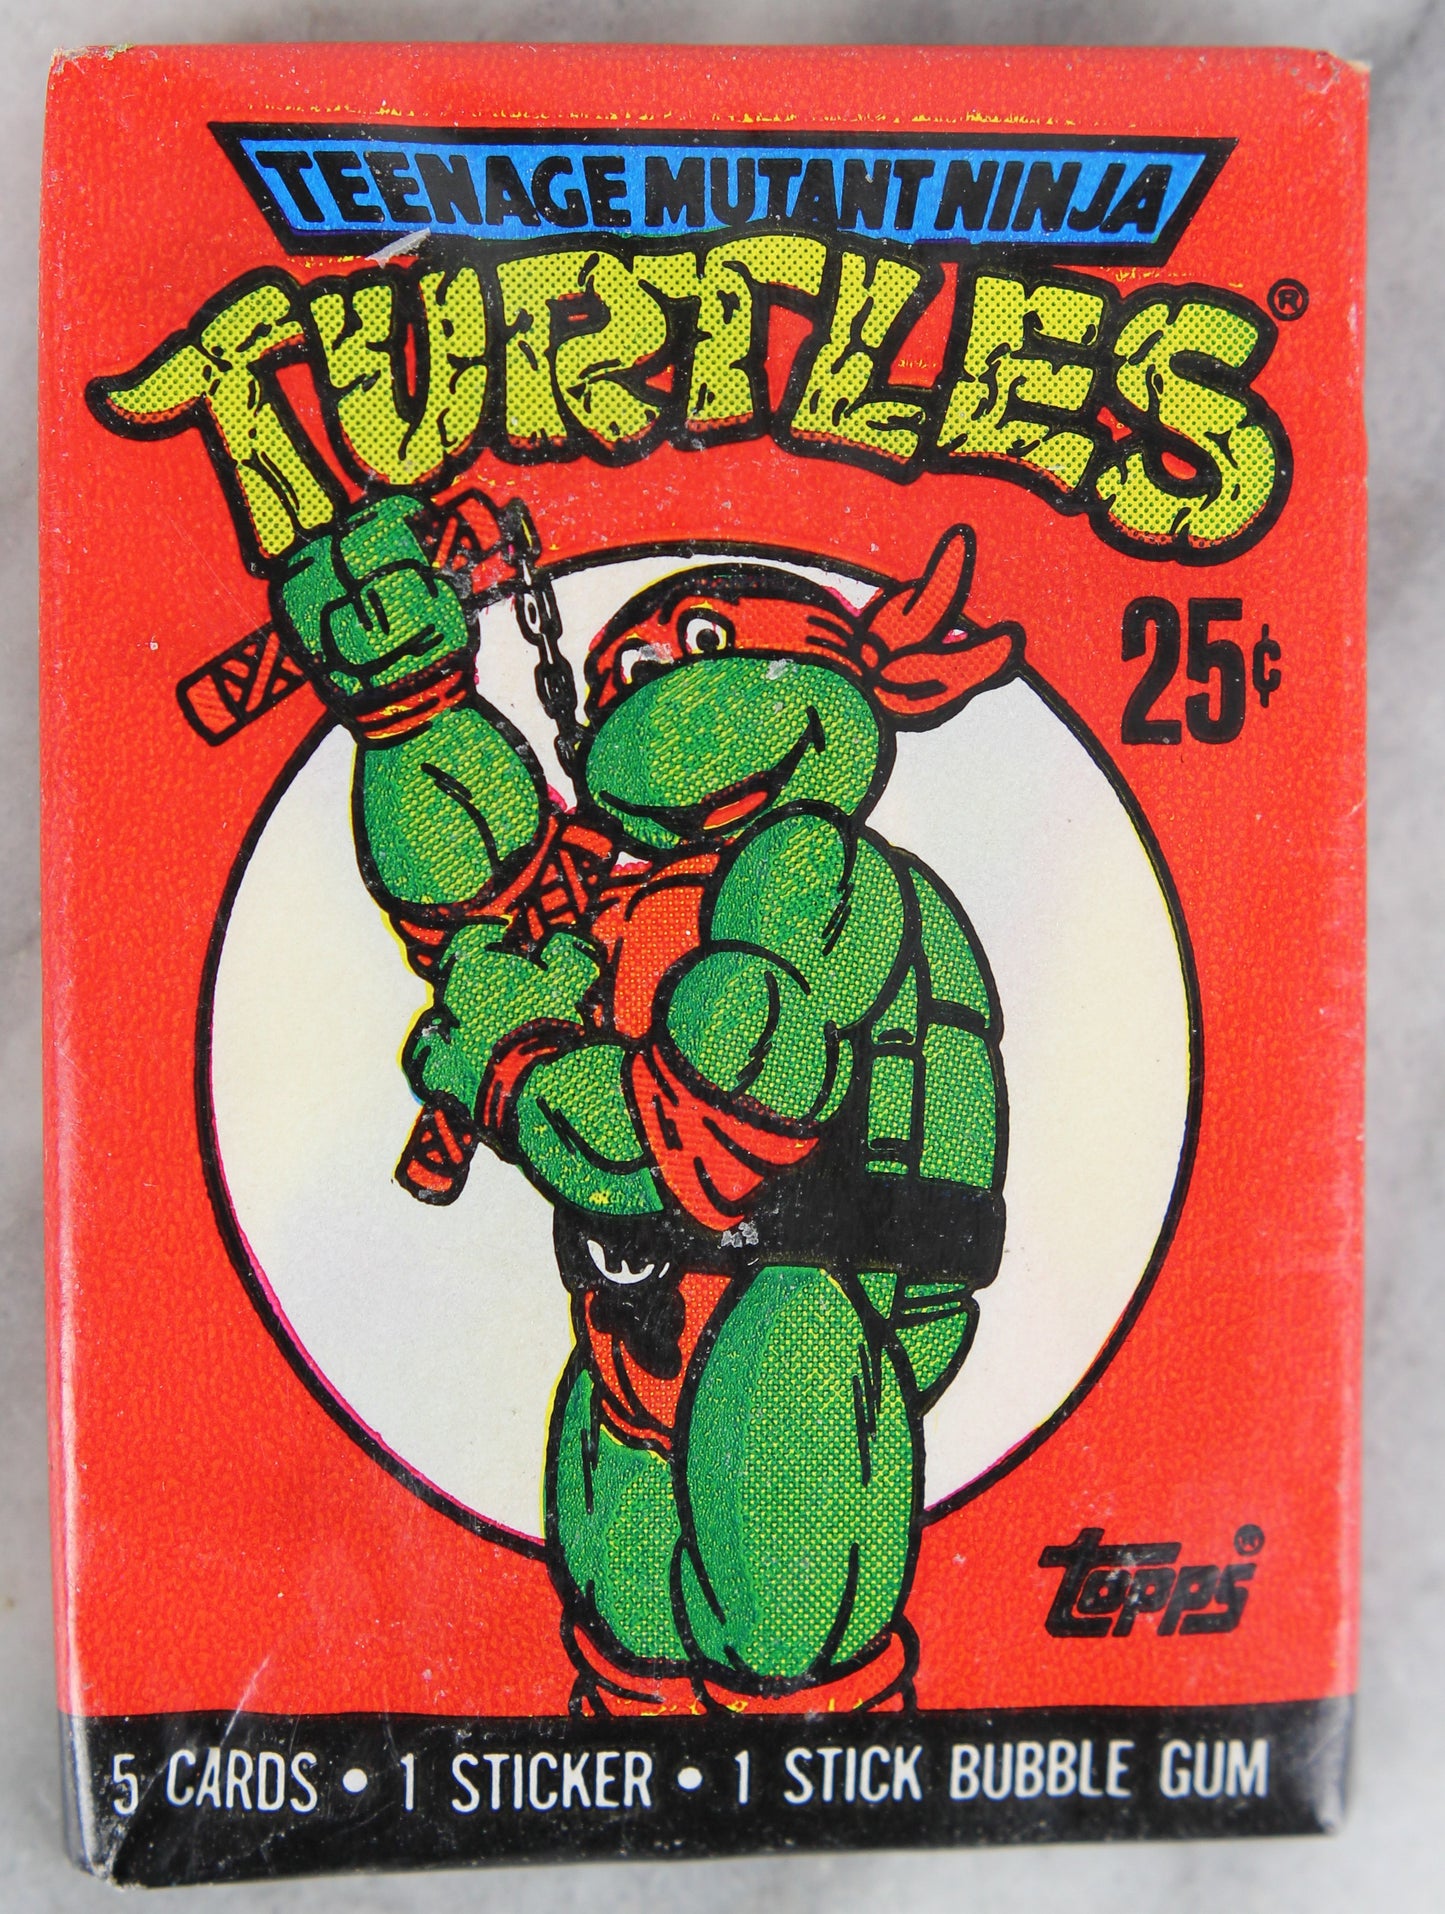 Topps Teenage Mutant Ninja Turtles Trading Cards, 1989 - Four (4) Wax Packs